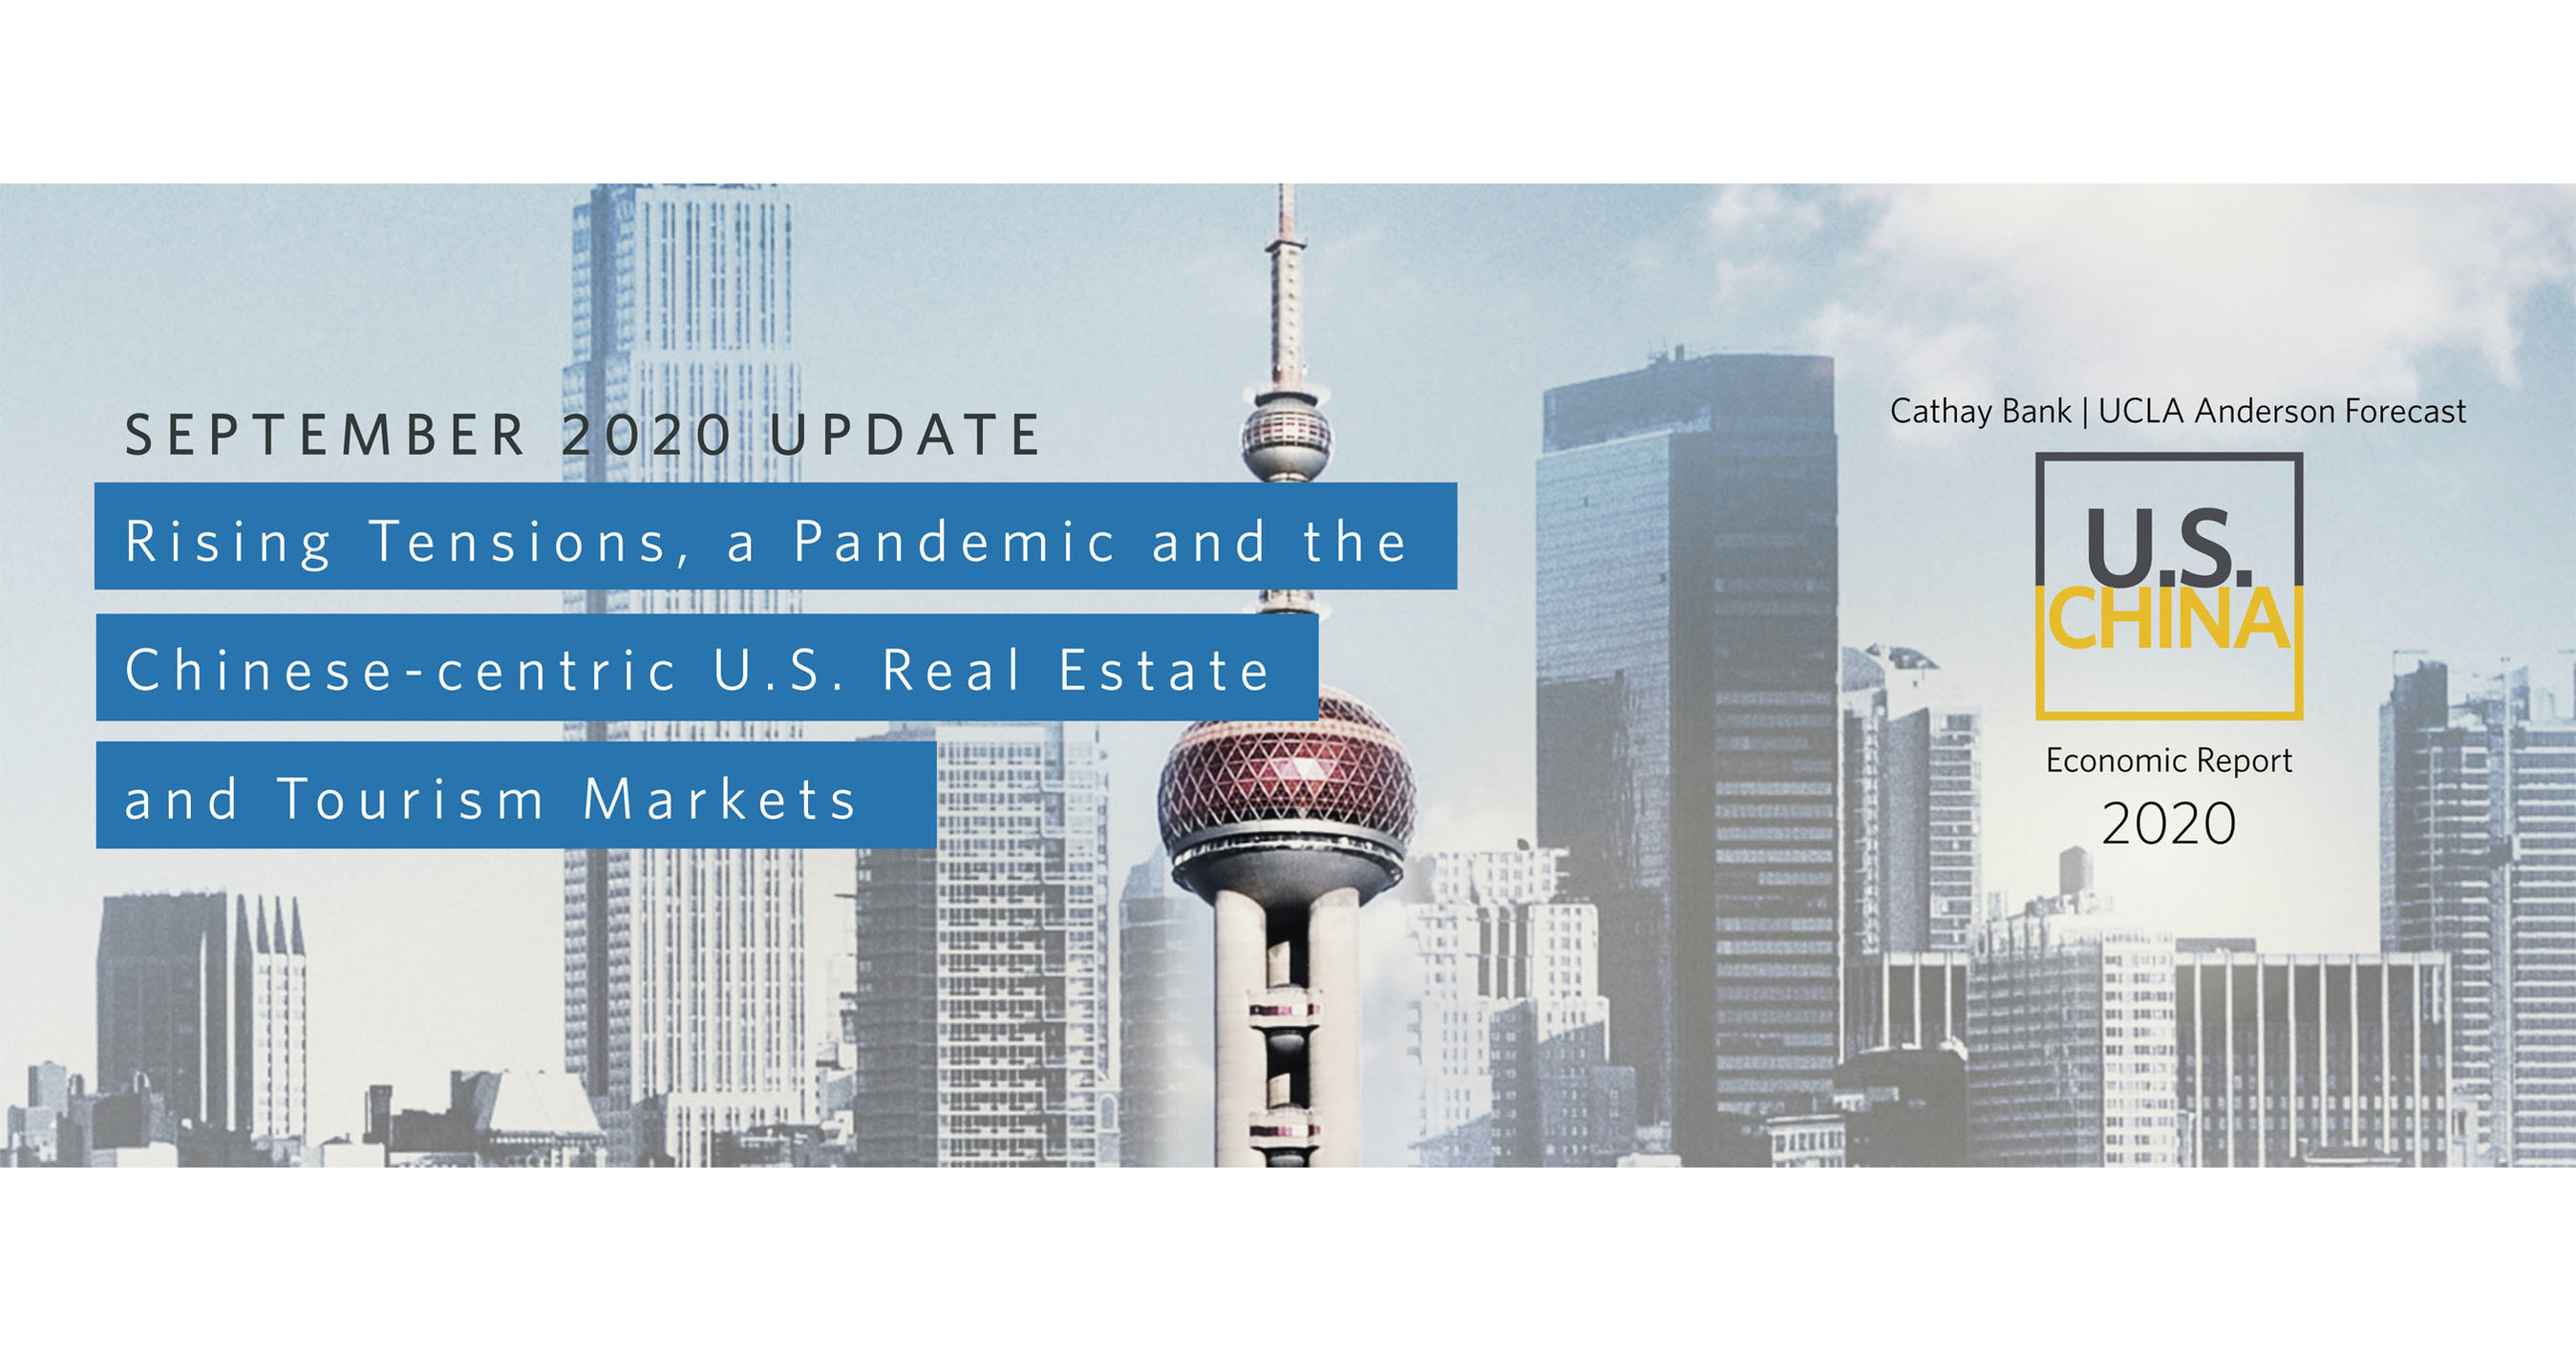 UCLA Anderson Forecast Cathay Bank U.S.China Economic Report 2020